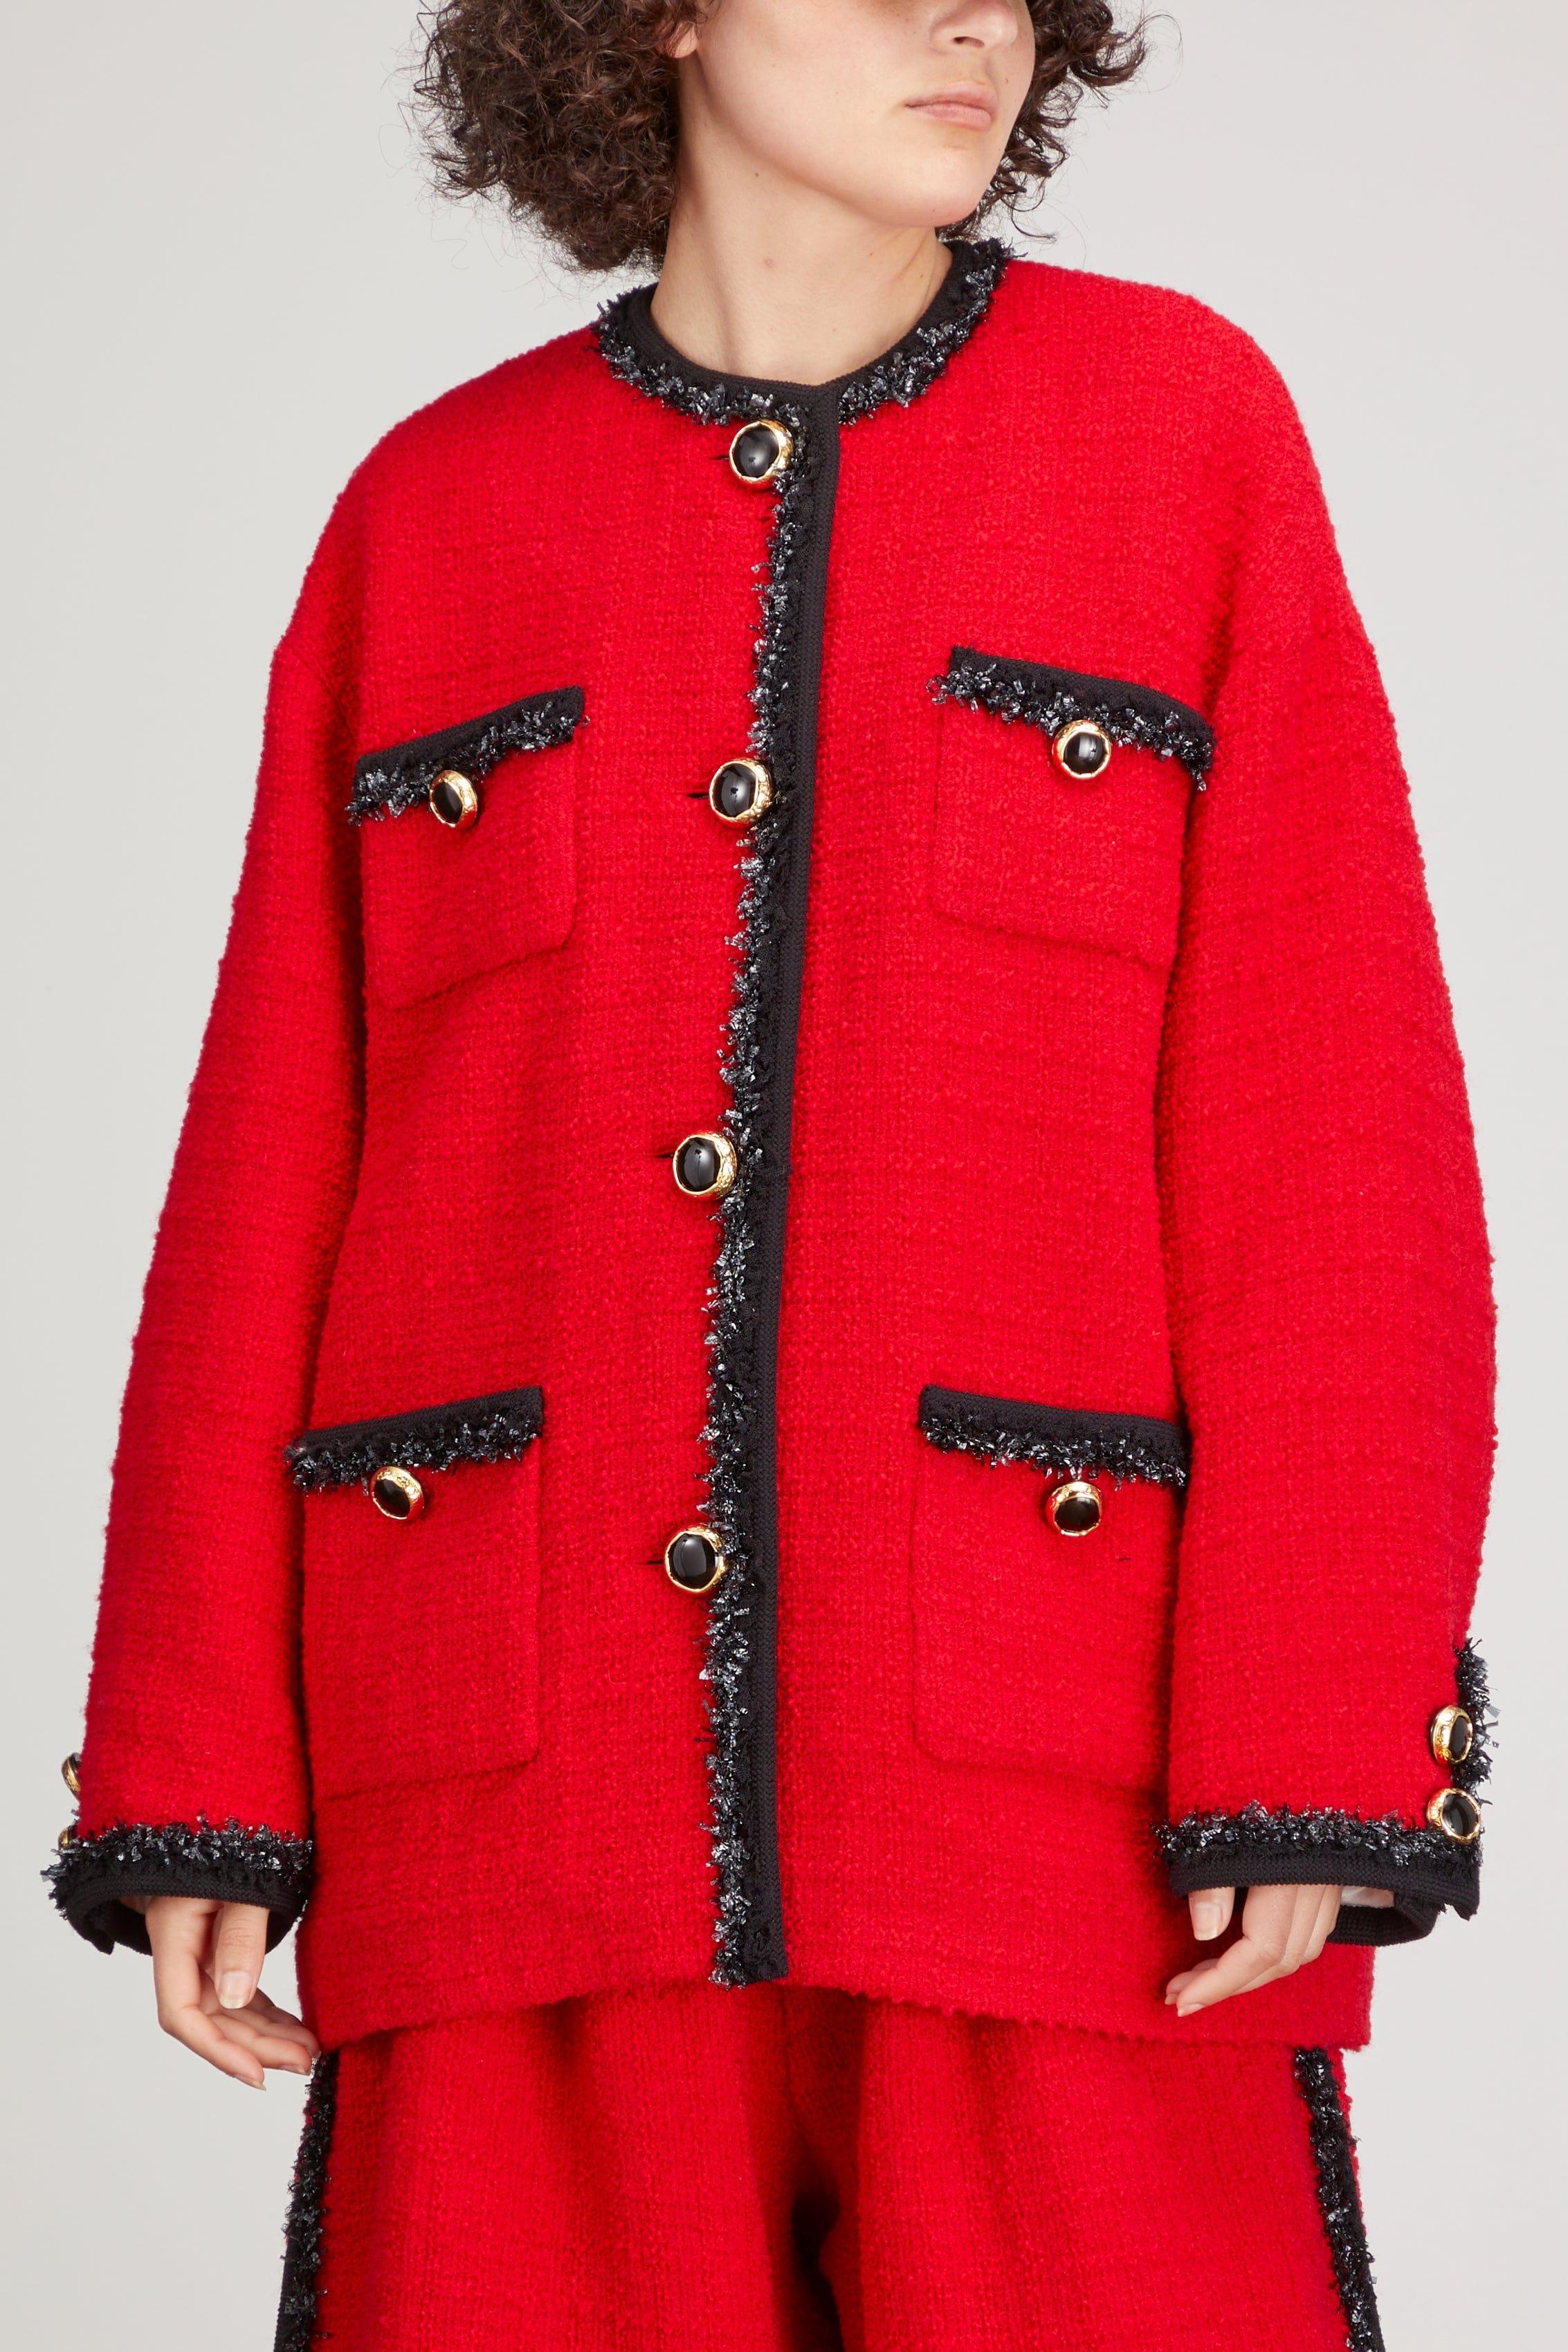 MERYLL ROGGE Oversized Tweed Jacket in Red | Lyst